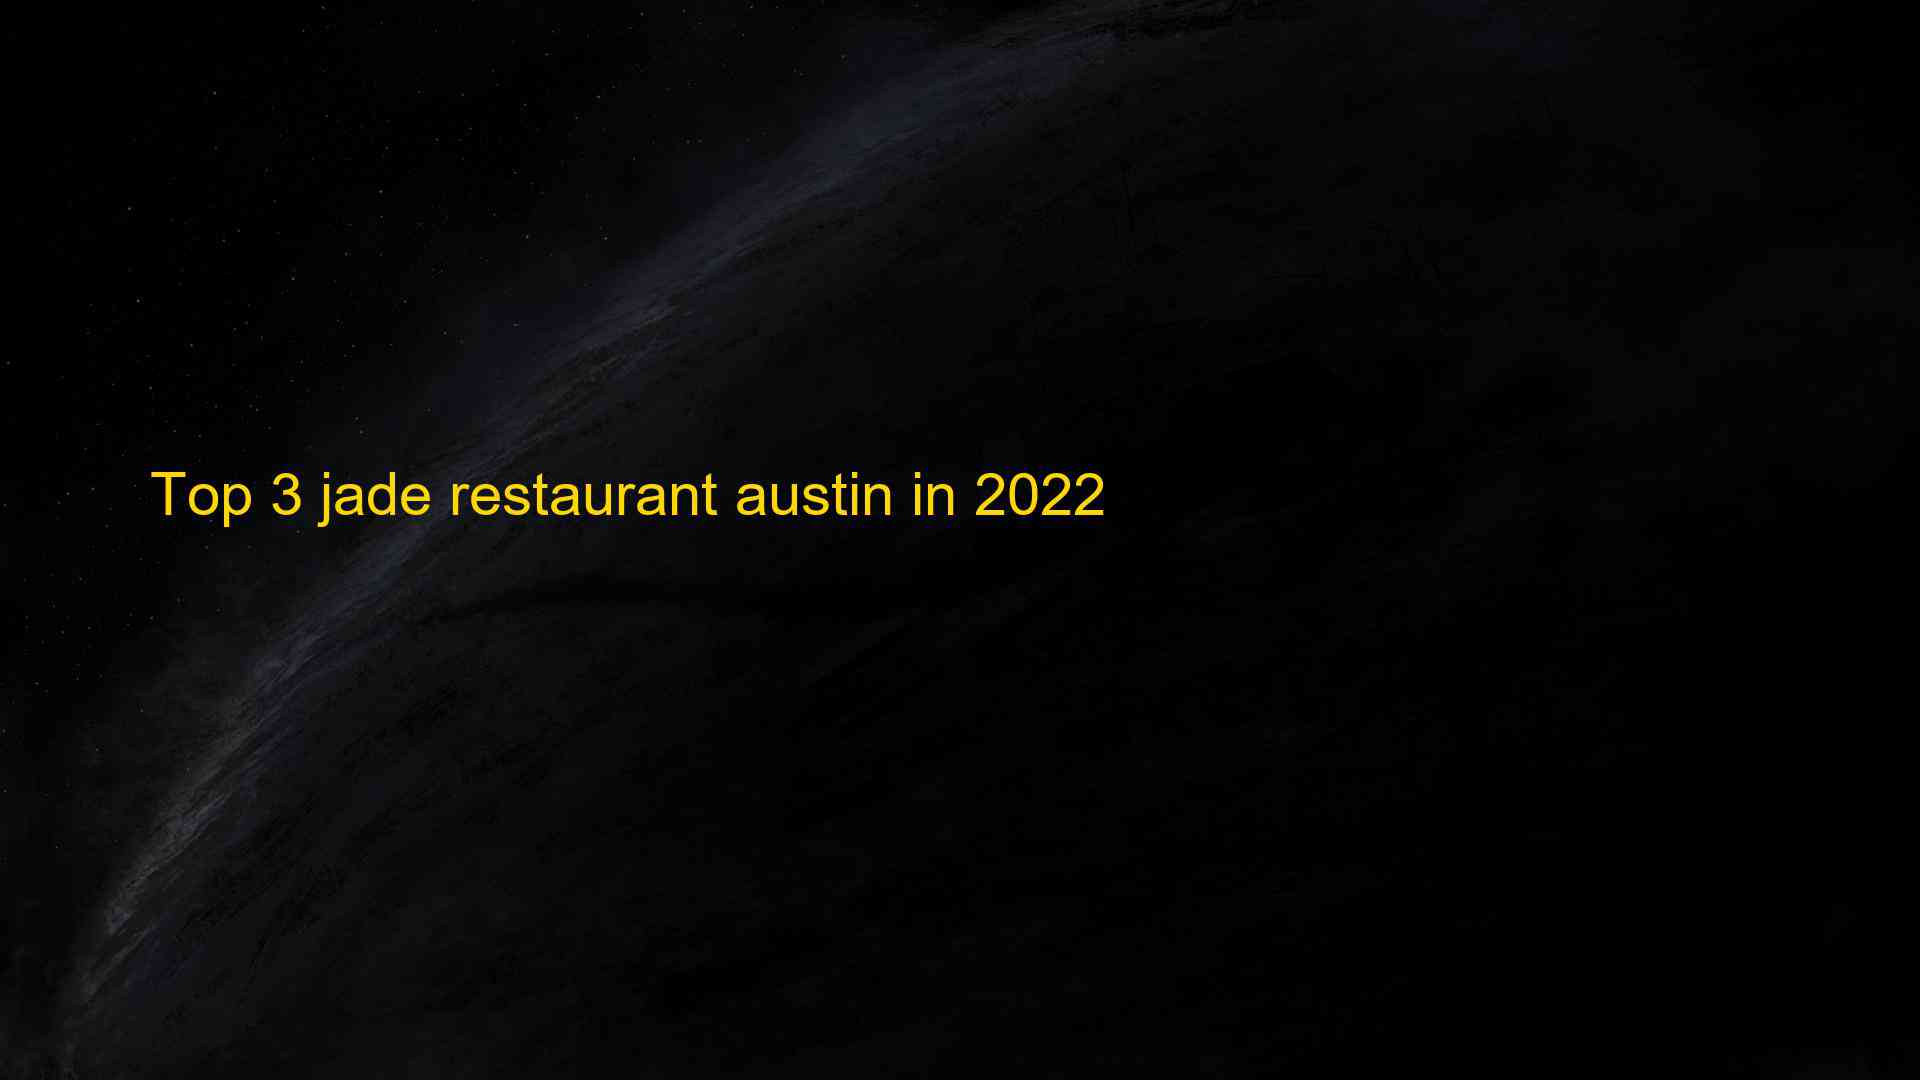 Top 3 jade restaurant austin in 2022 1663181400